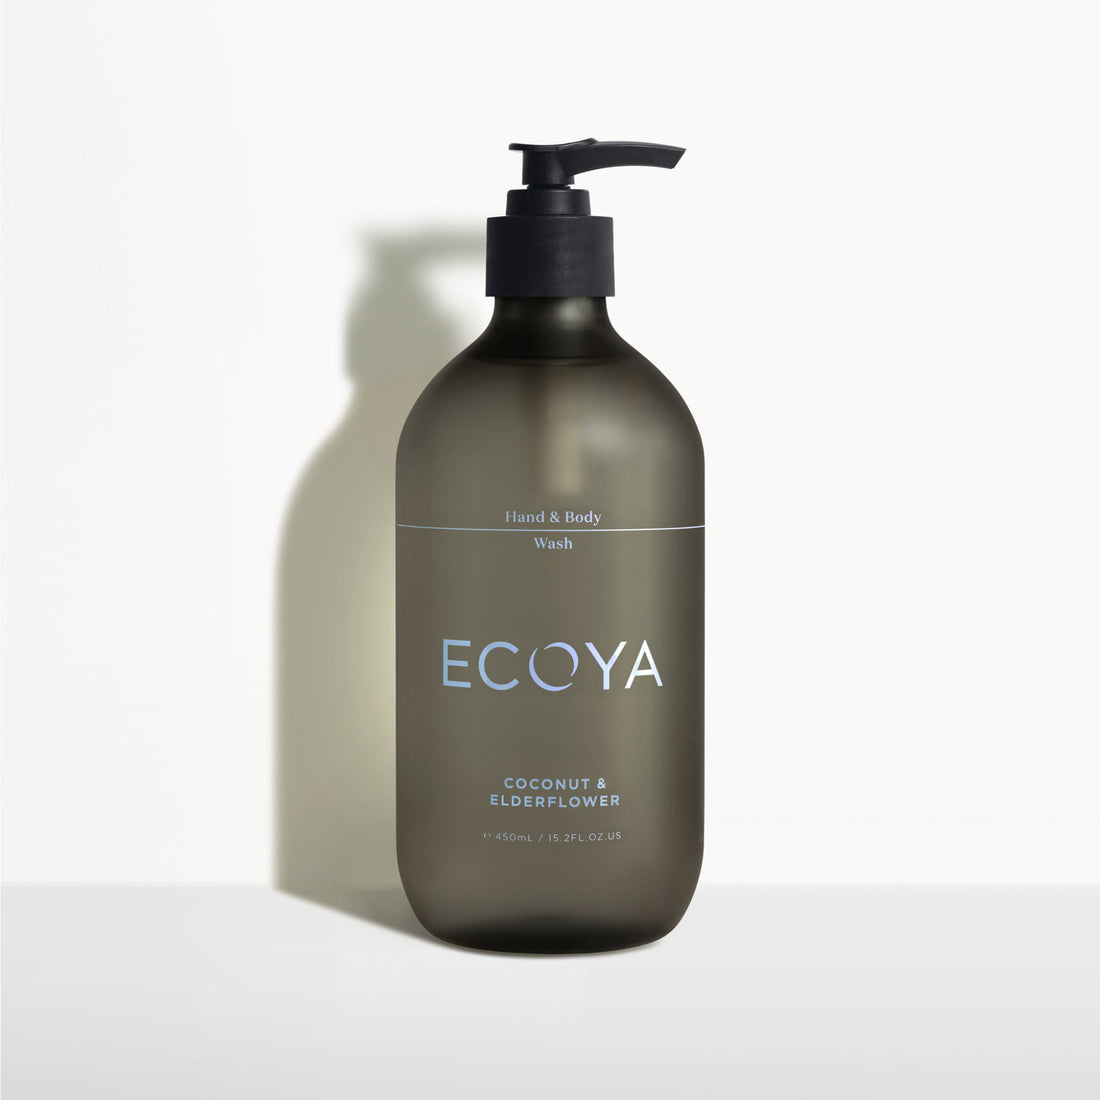 ECOYA Coconut & Elderflower Hand & Body Wash